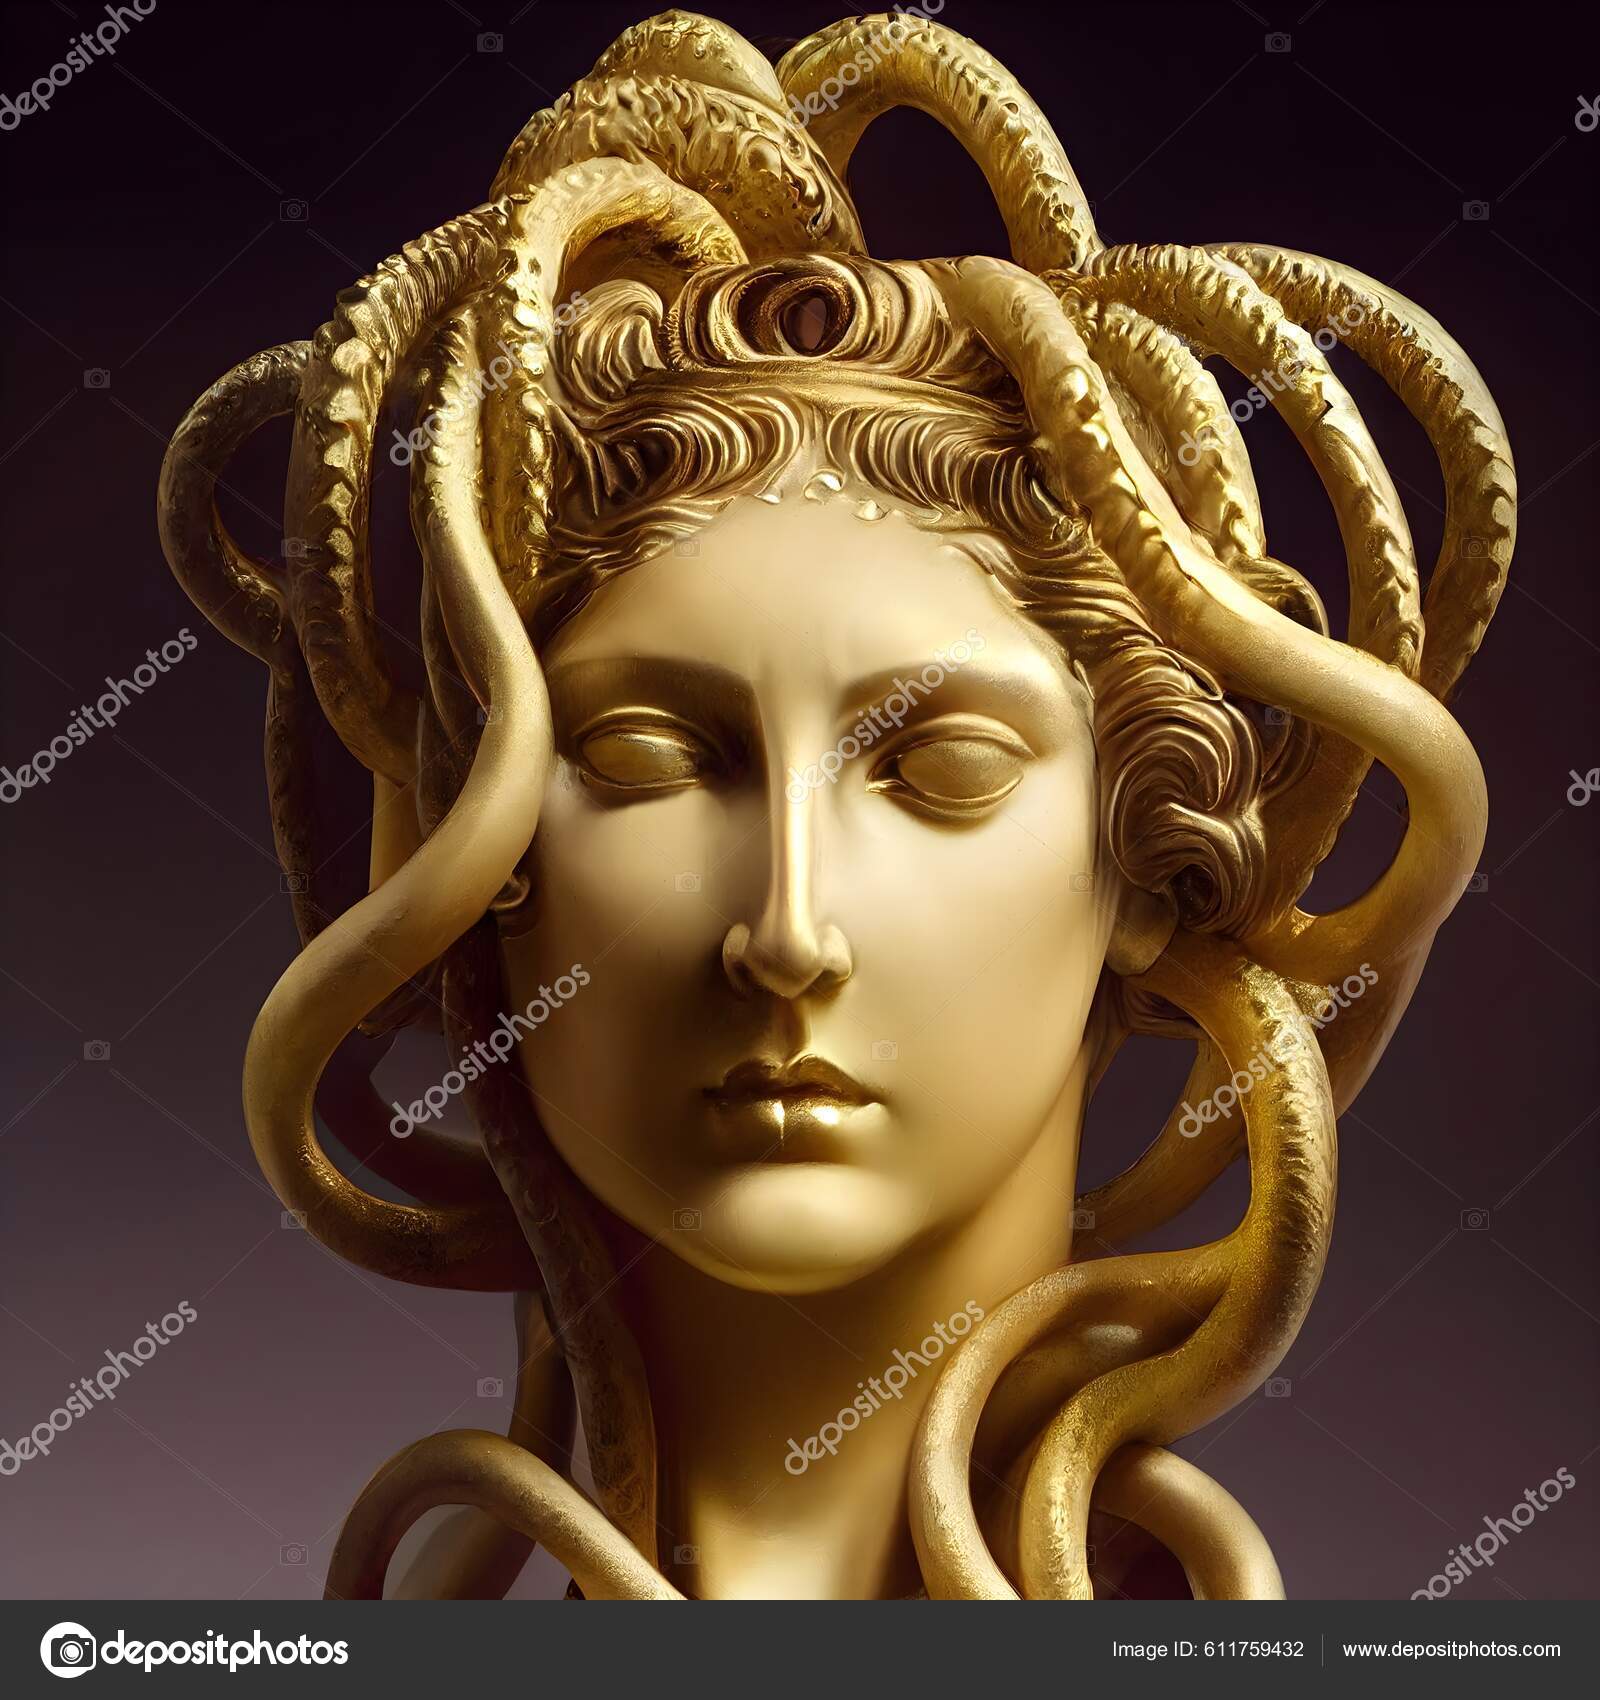 Gorgon Medusa Greek mythology, digital illustration Stock Illustration